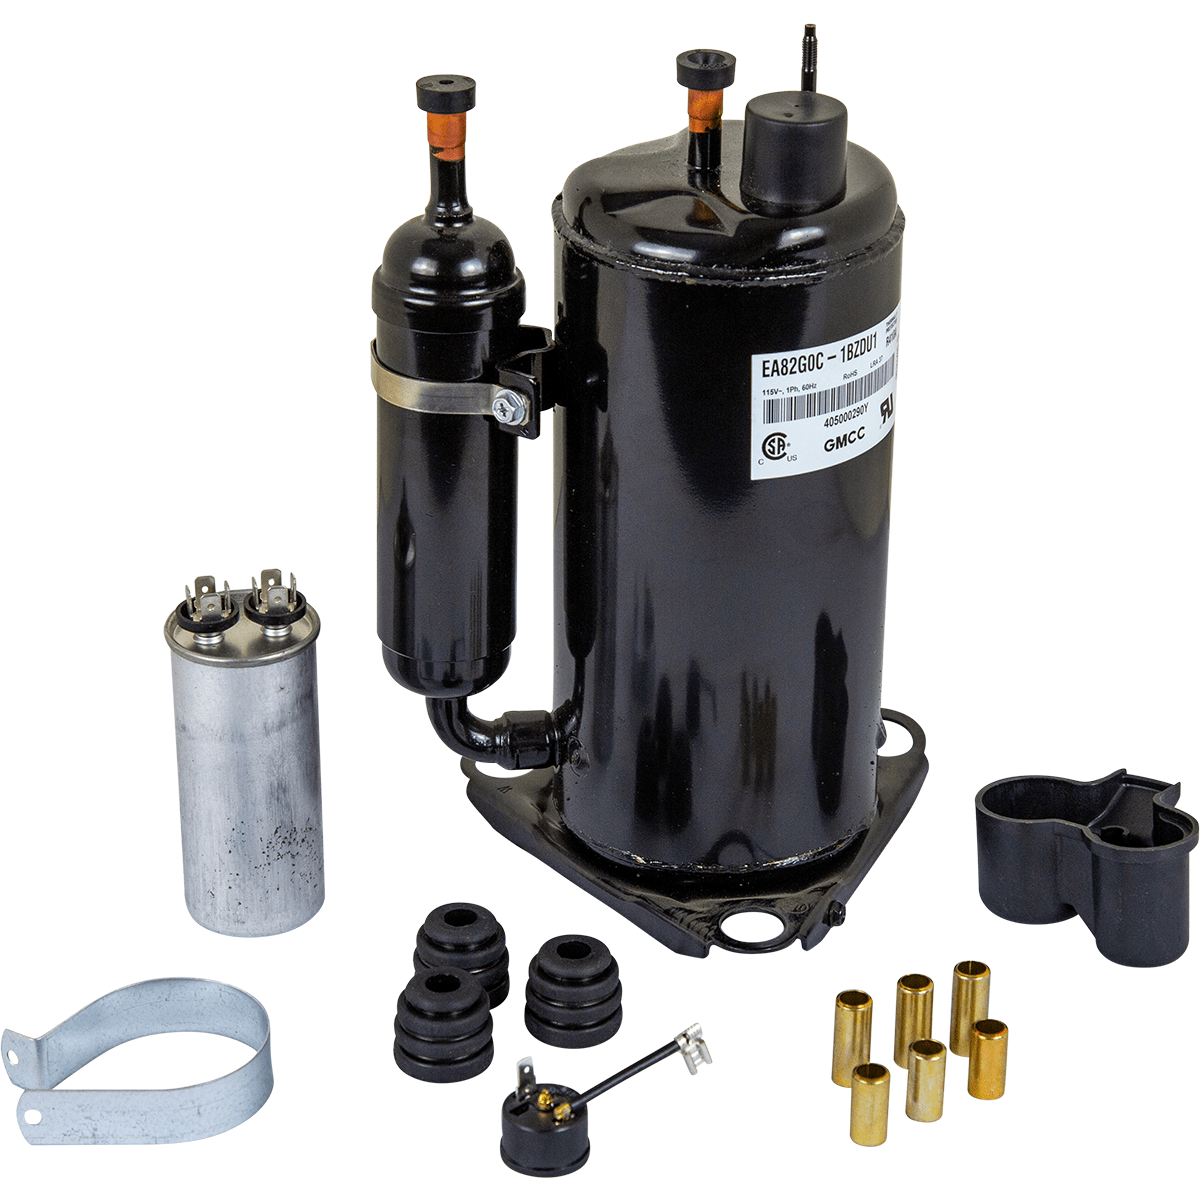 Santa Fe Replacement Compressor w/Capacitor & Overload For Classic Dehumidifier (4032371)